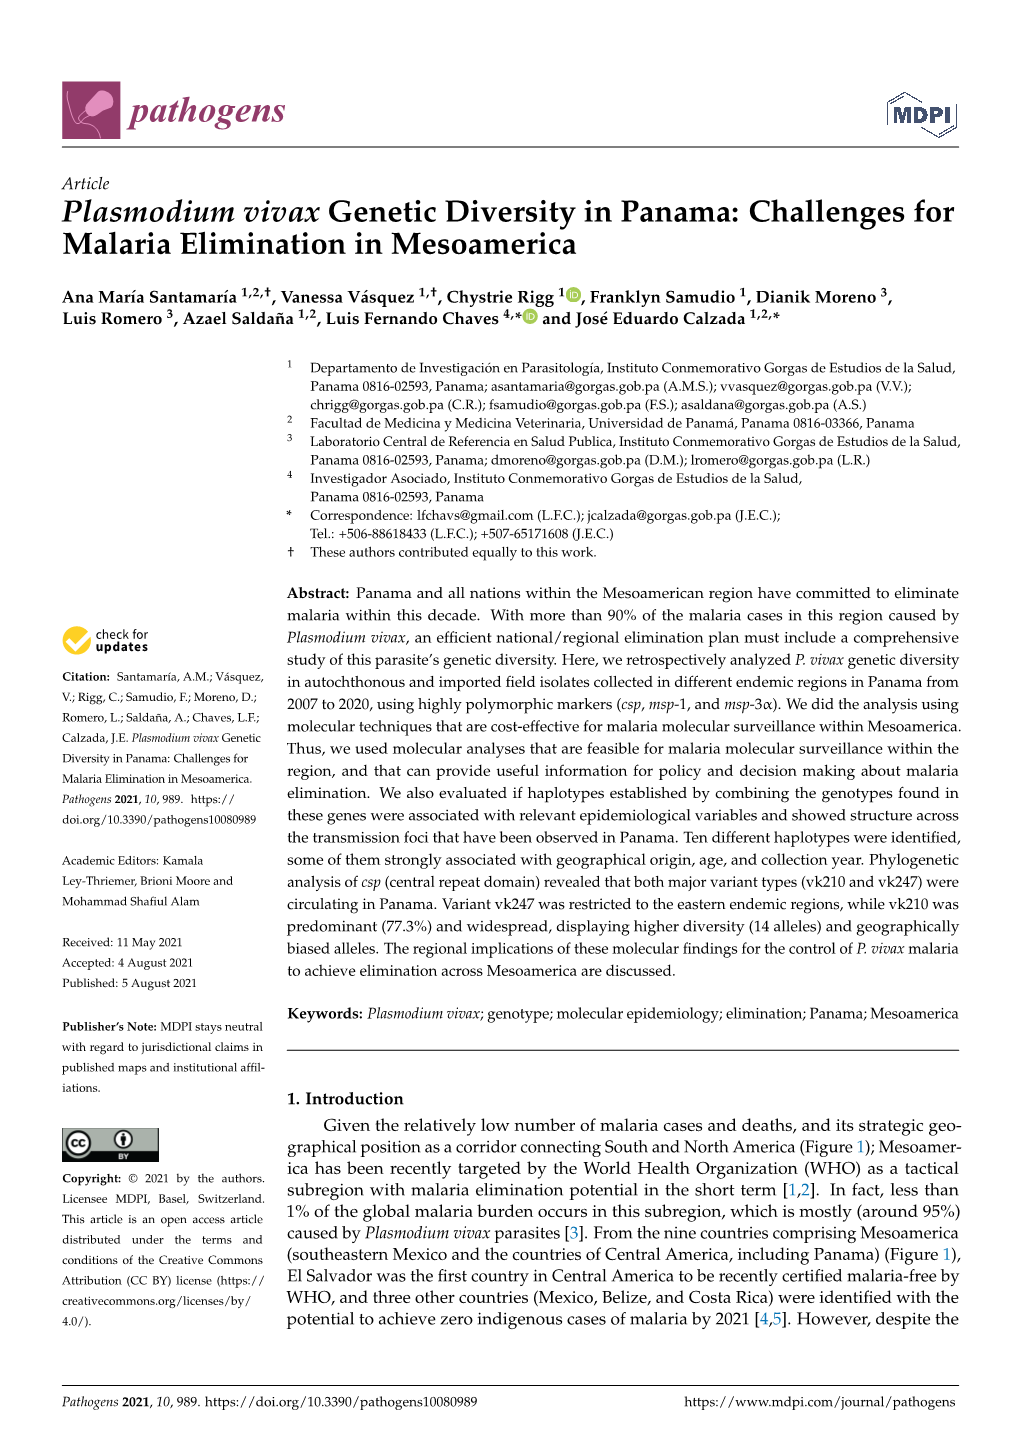 Plasmodium Vivax Genetic Diversity in Panama: Challenges for Malaria Elimination in Mesoamerica